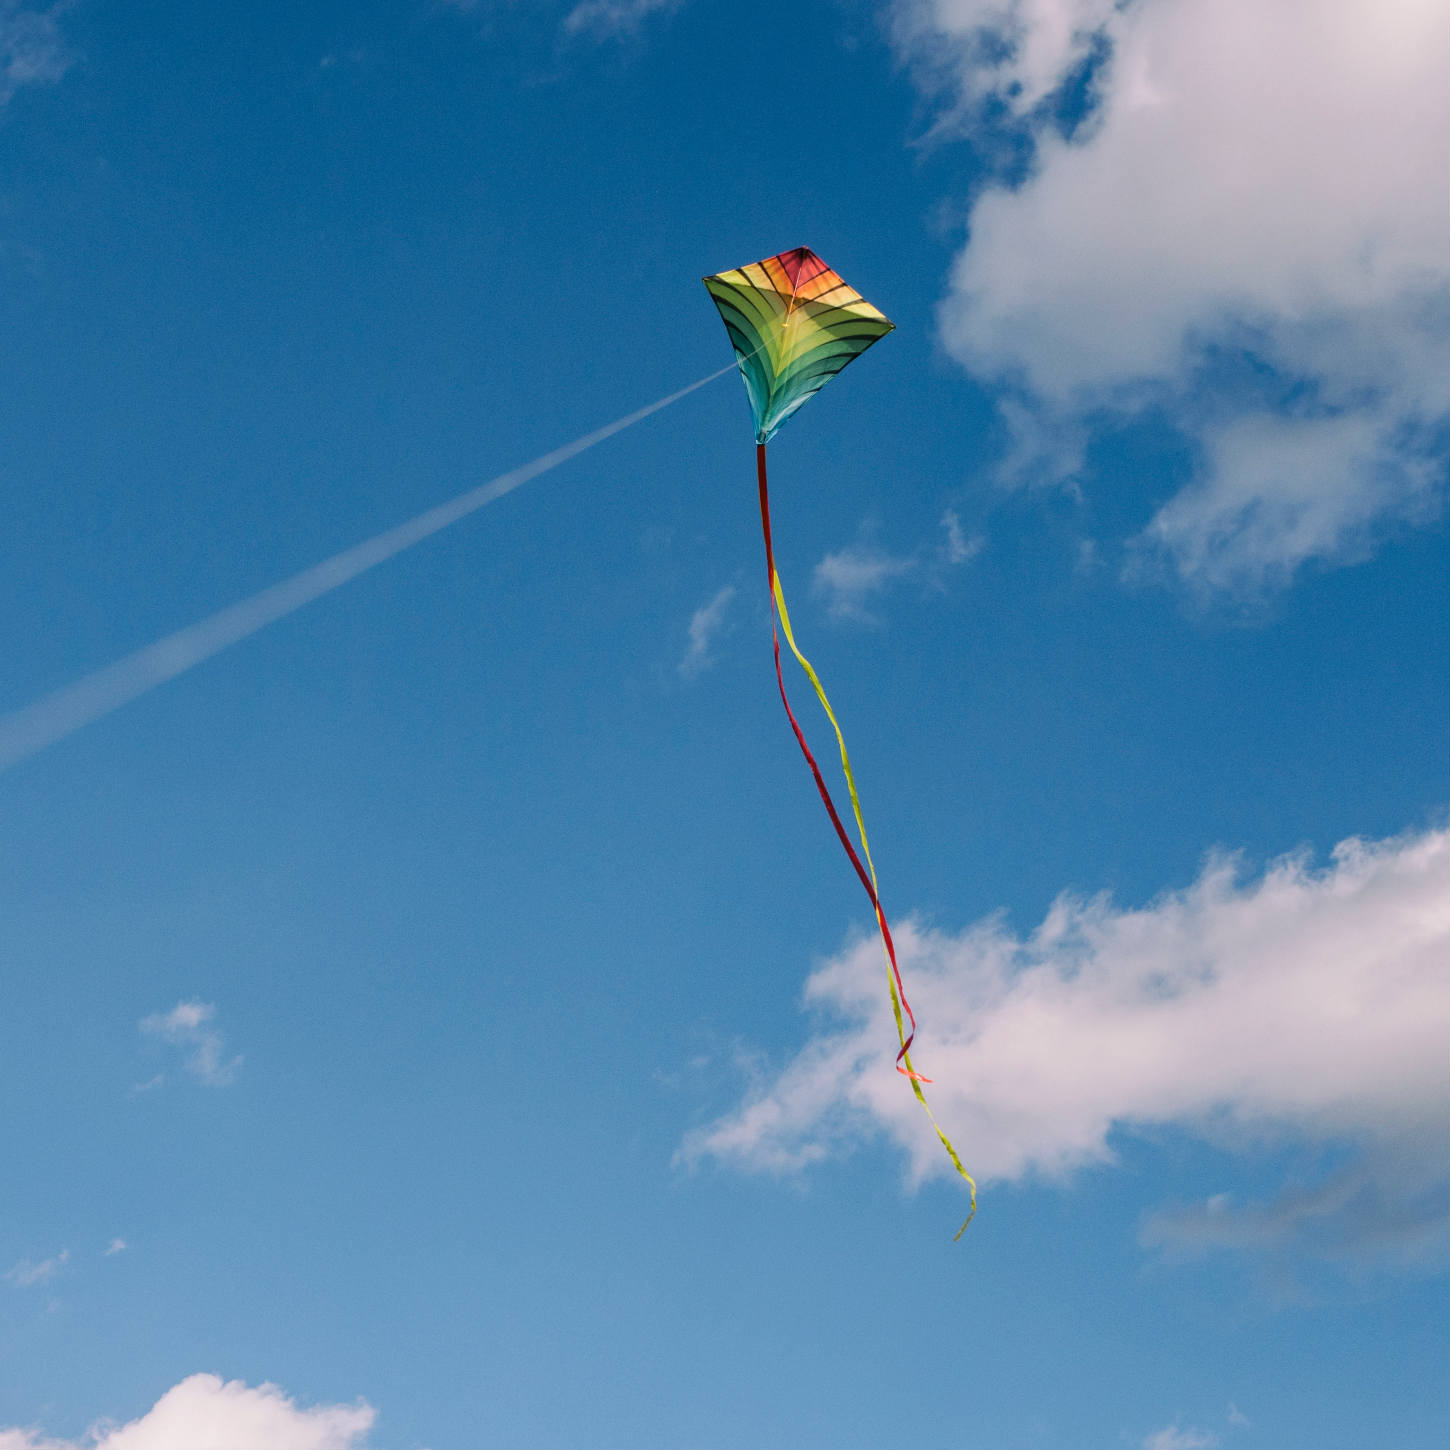 Kites Rise on the Wind: The Origin of Kites